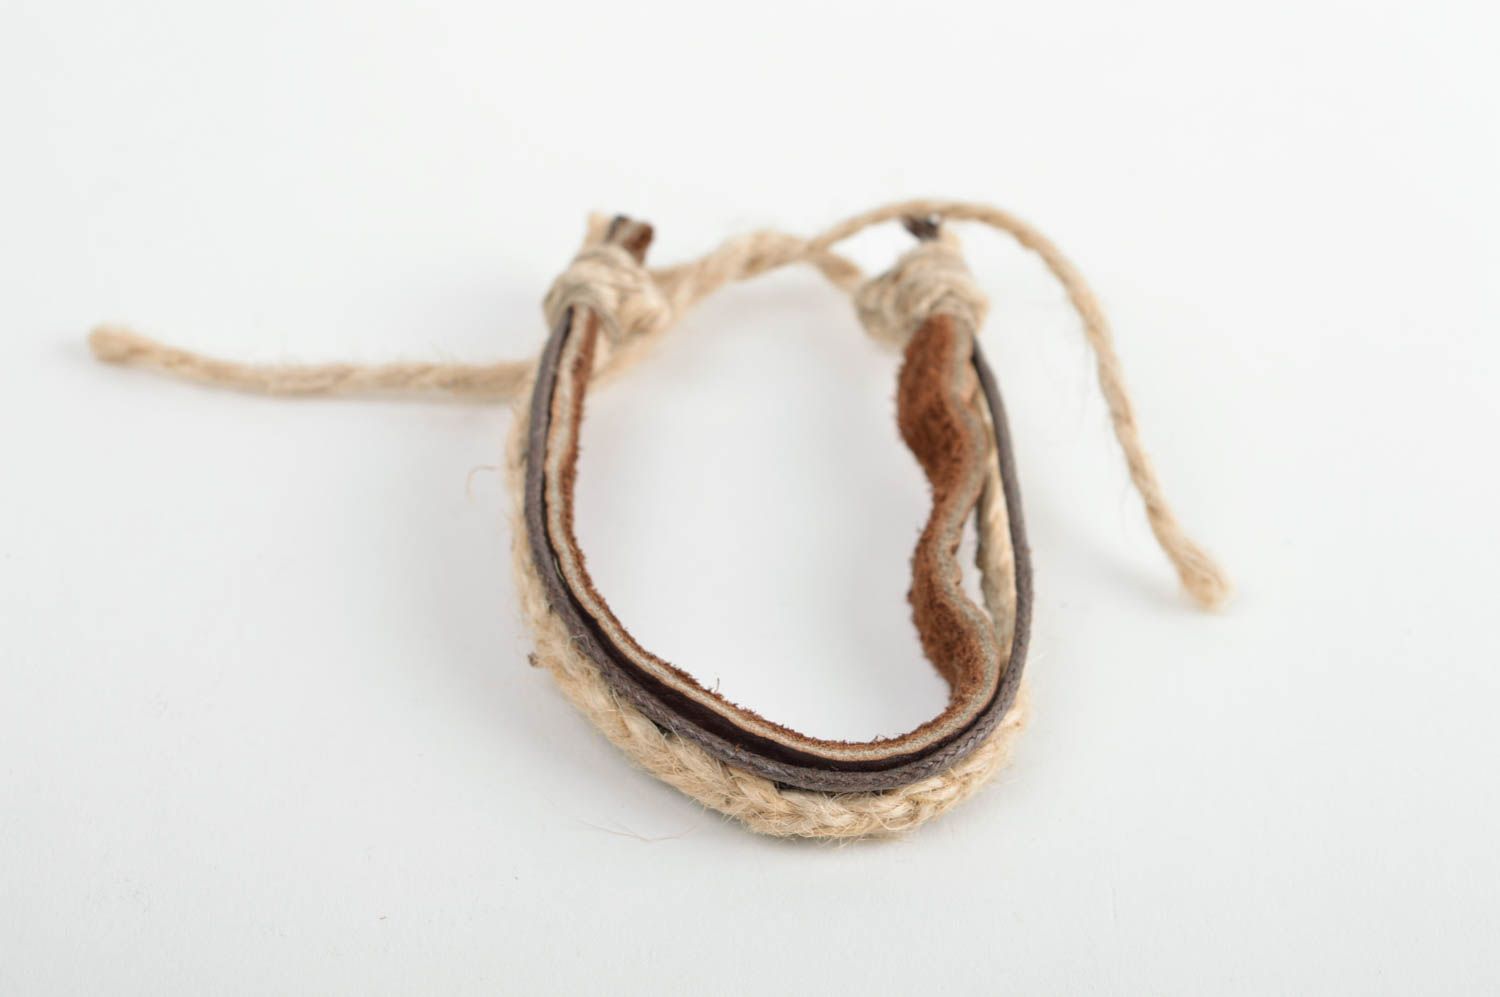 Handmade leather bracelet fashion trends artisan jewelry designs gift ideas photo 2